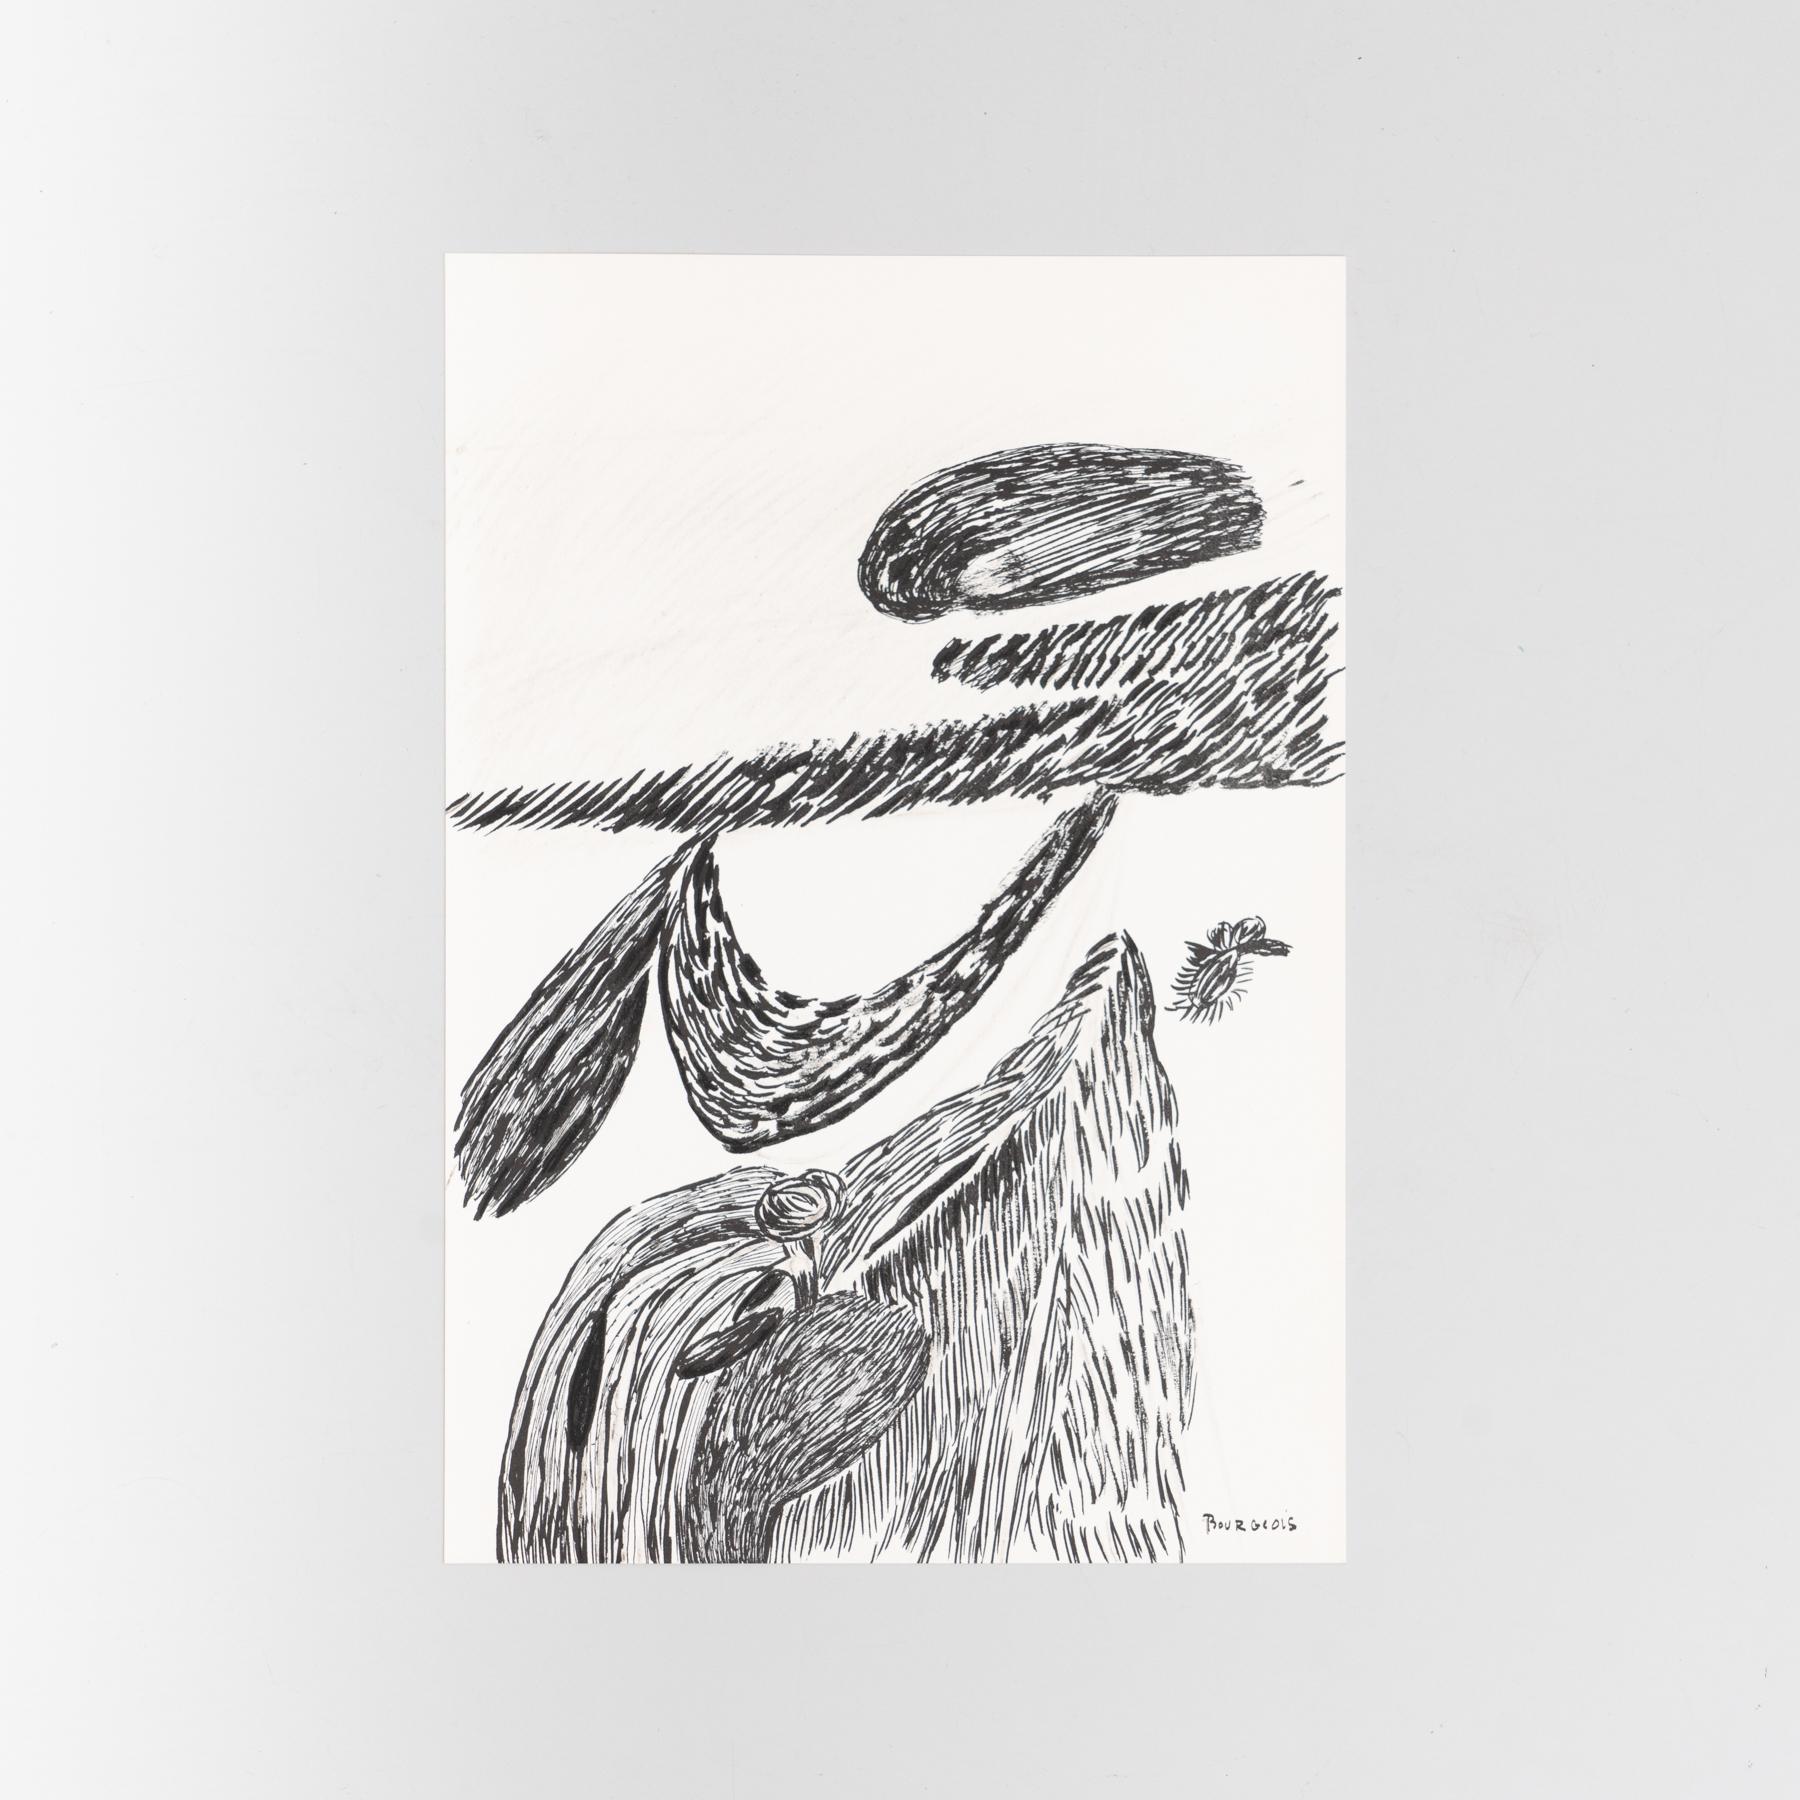 Fin du 20e siècle Louise Bourgeois Black and White Mid Century Modern Abstract Lithography (Lithographie abstraite du milieu du siècle dernier en noir et blanc) en vente